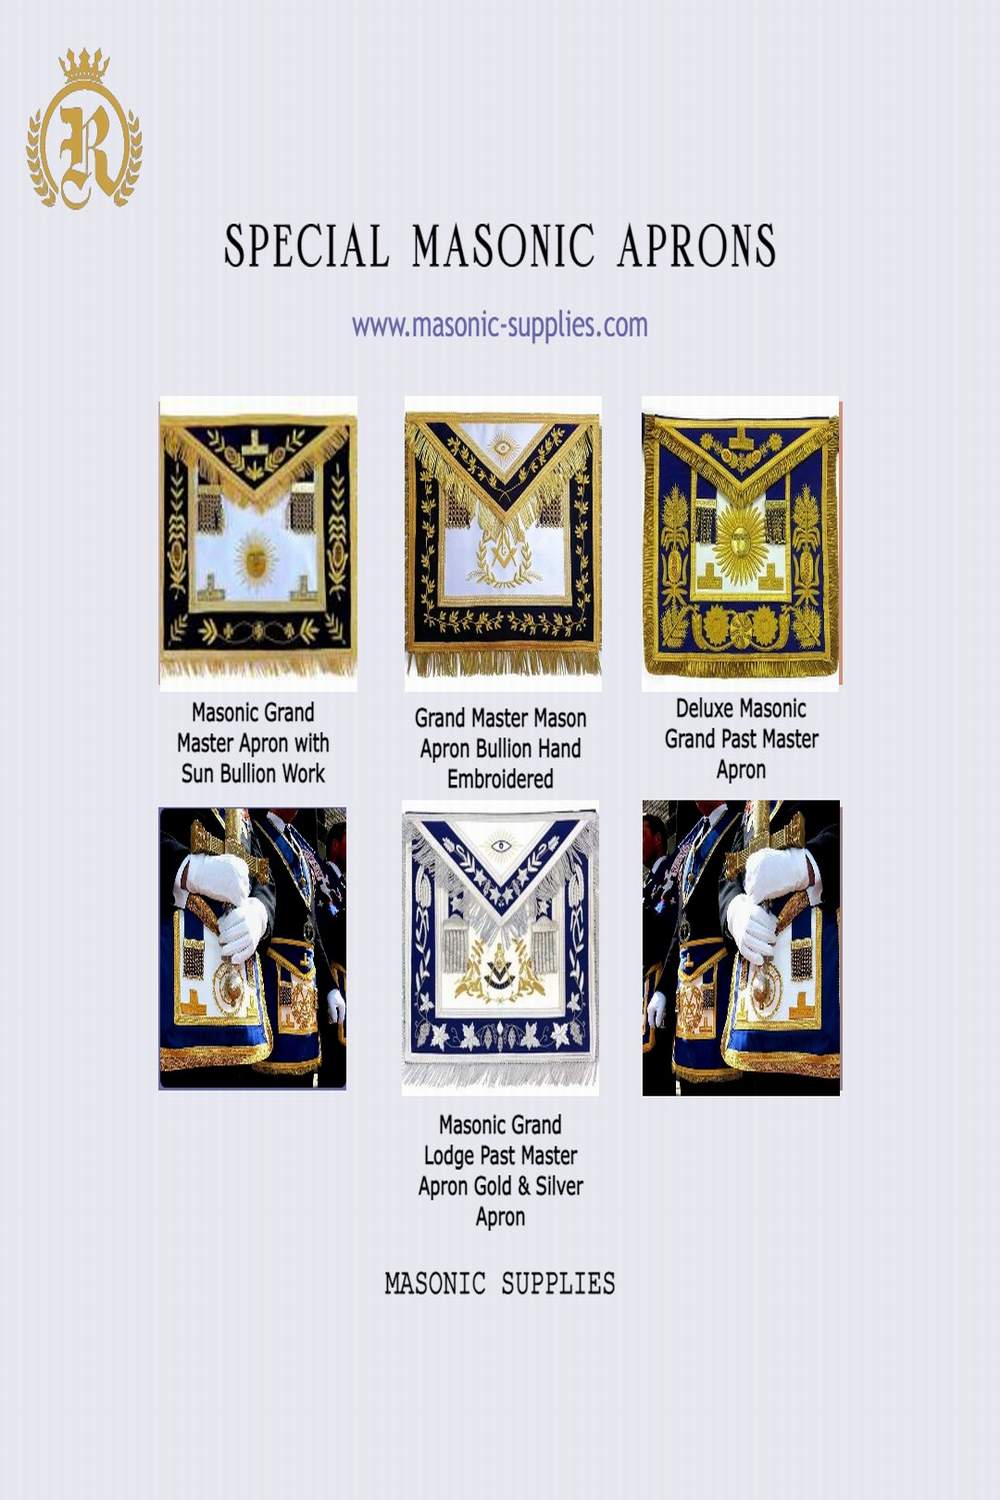 Masonic Supplies (@MasonicSupplie1) / Twitter